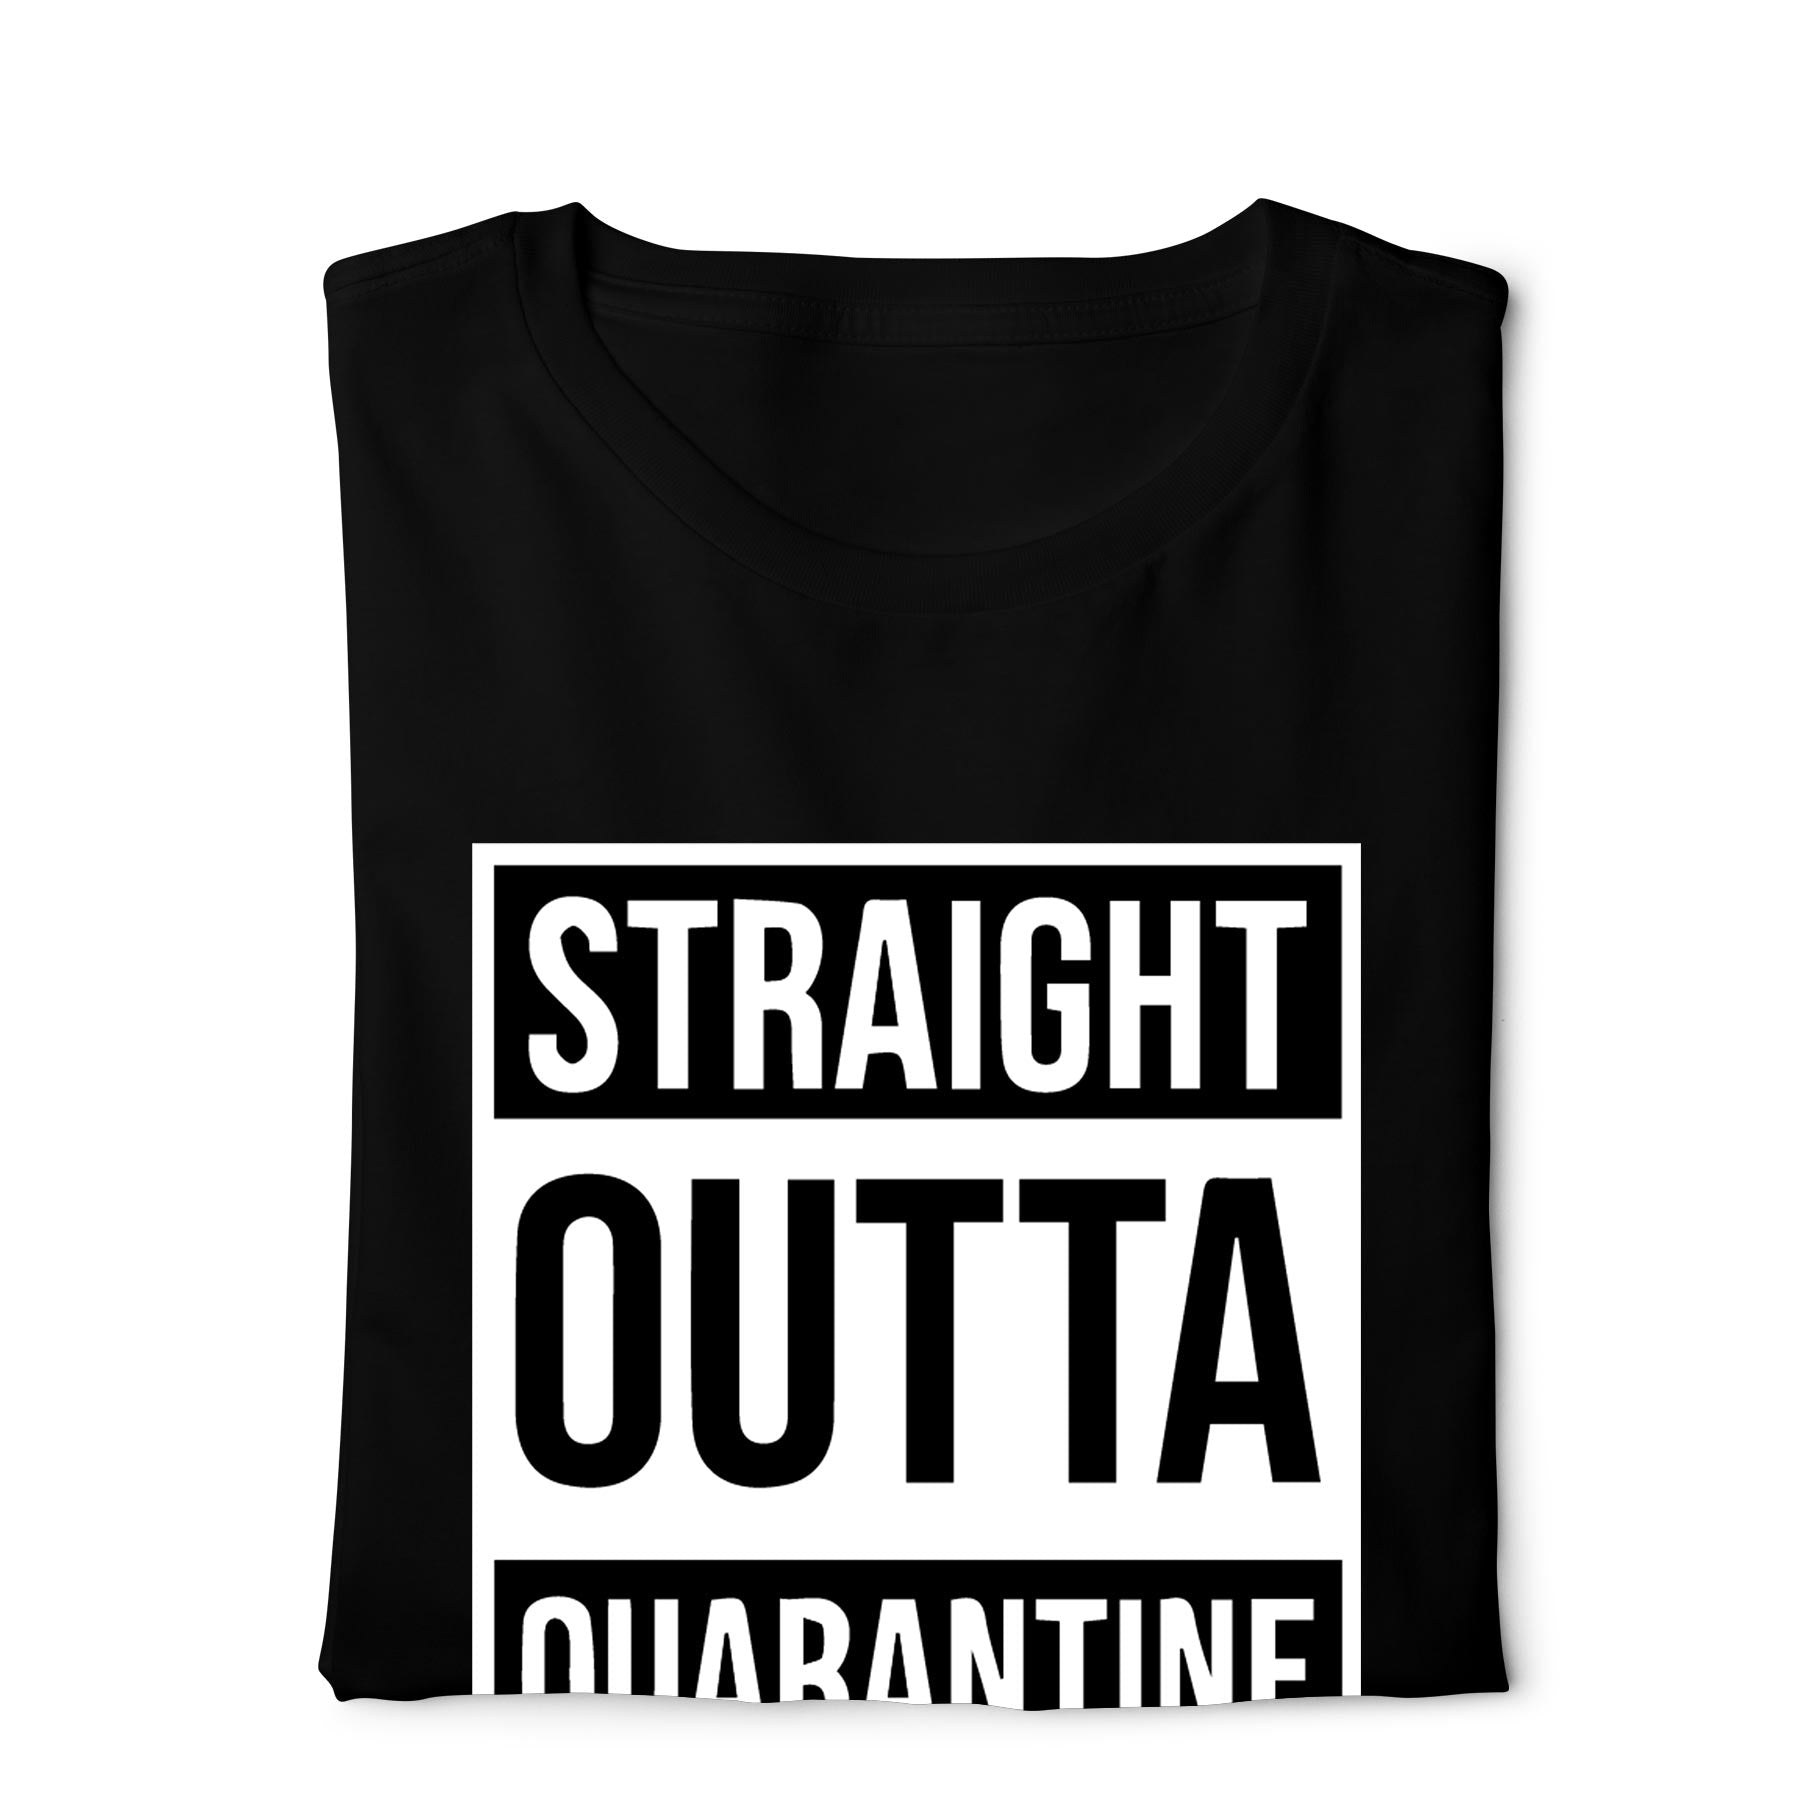 Straight outta quarantine - Digital Graphics Basic T-shirt Black - Ravin 